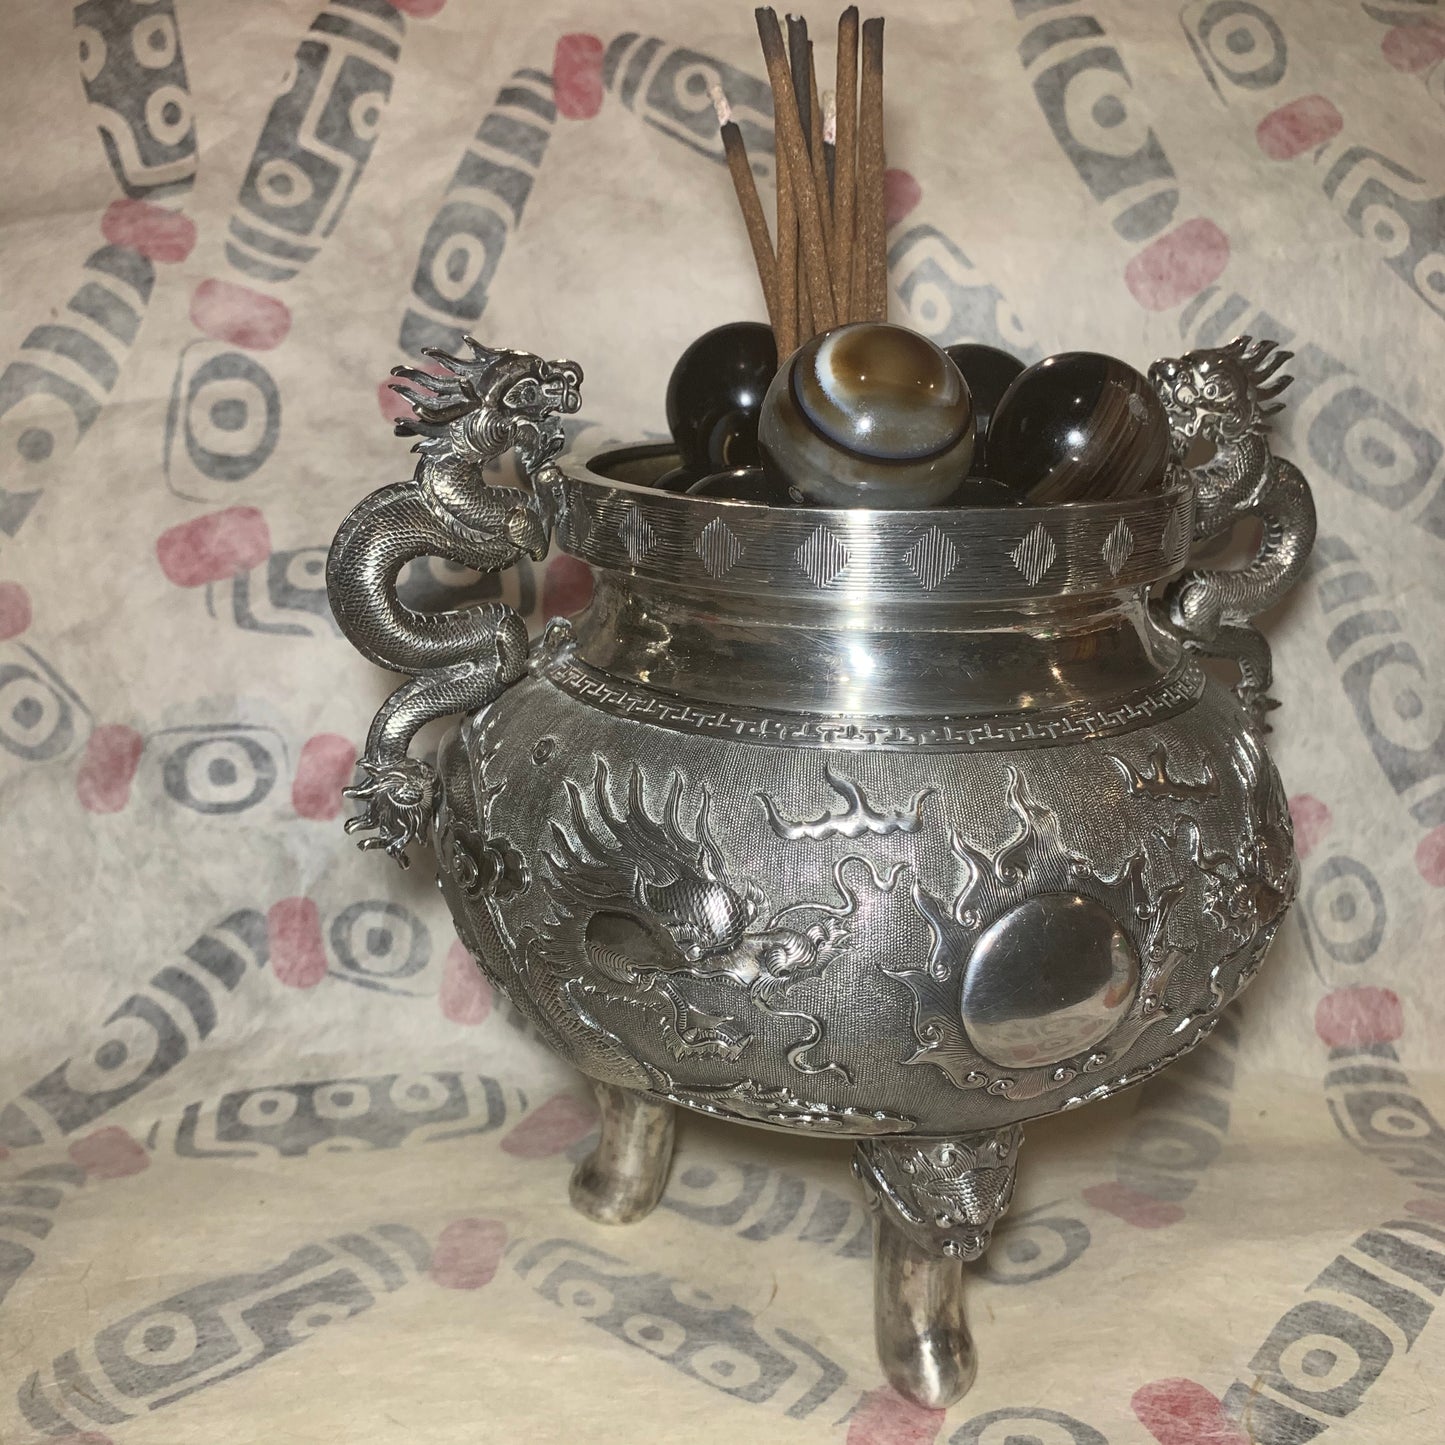 An antique silver censer